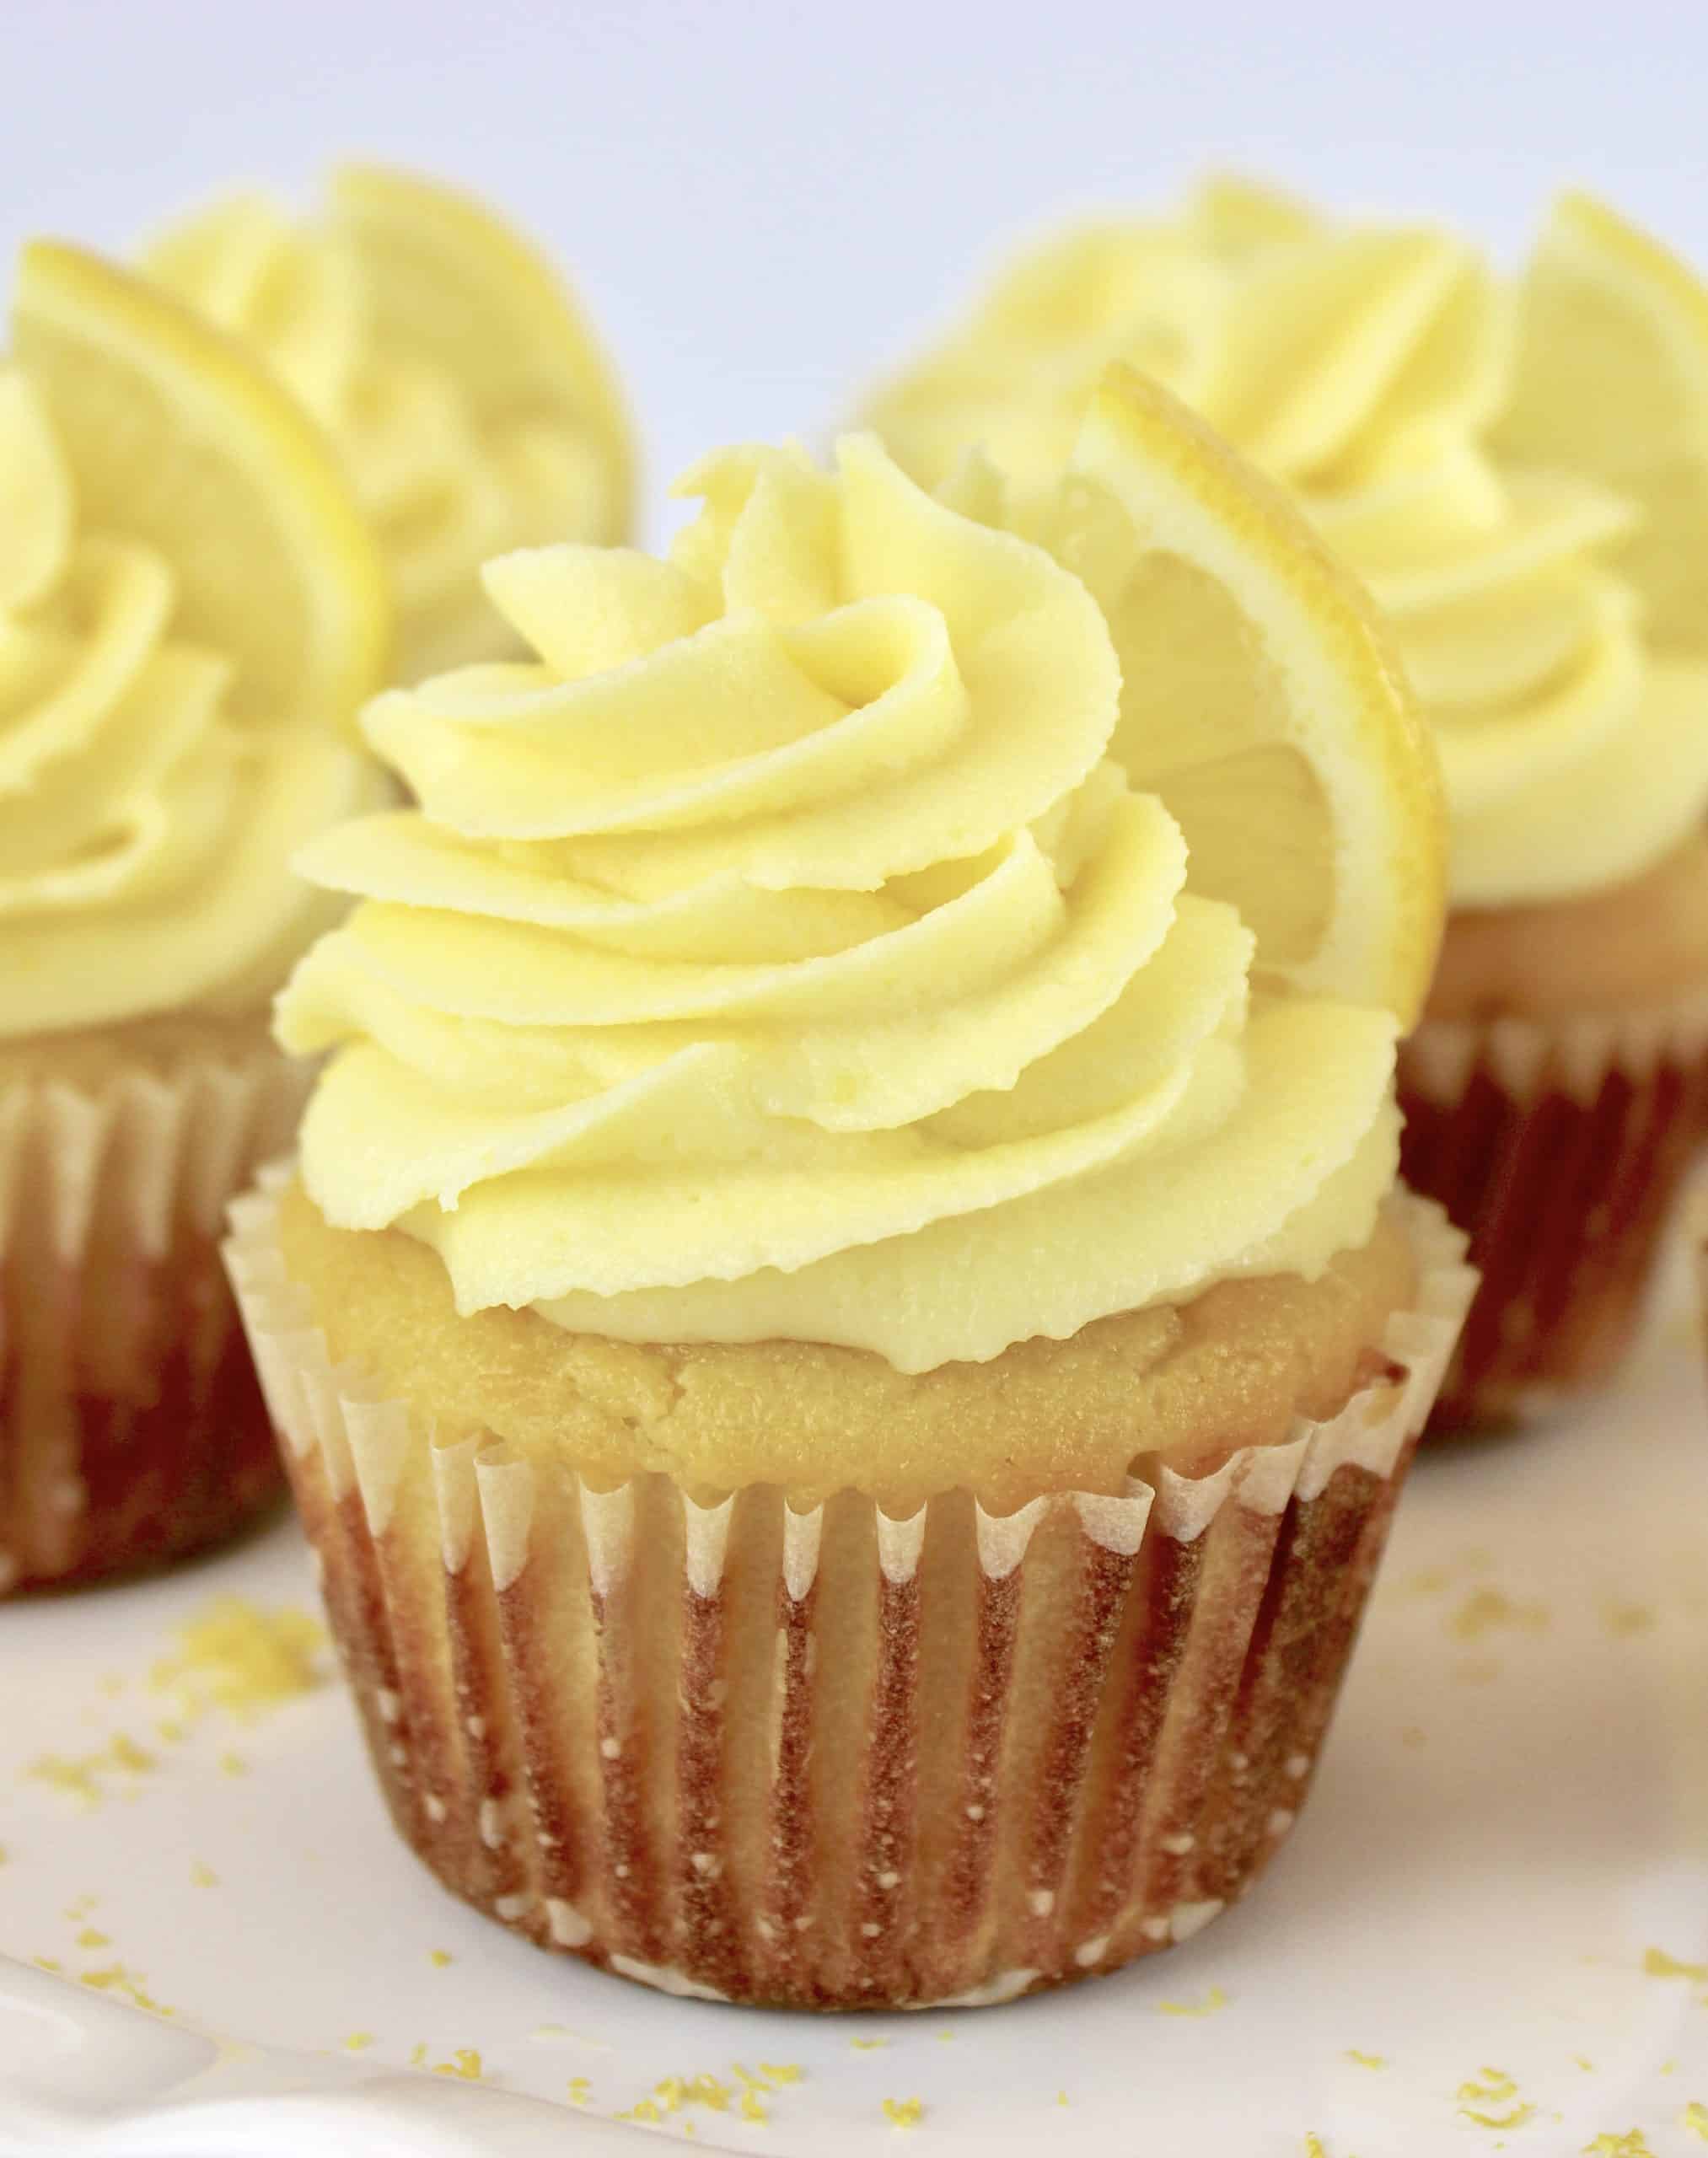 Keto Lemon Cupcakes with lemon slice on side